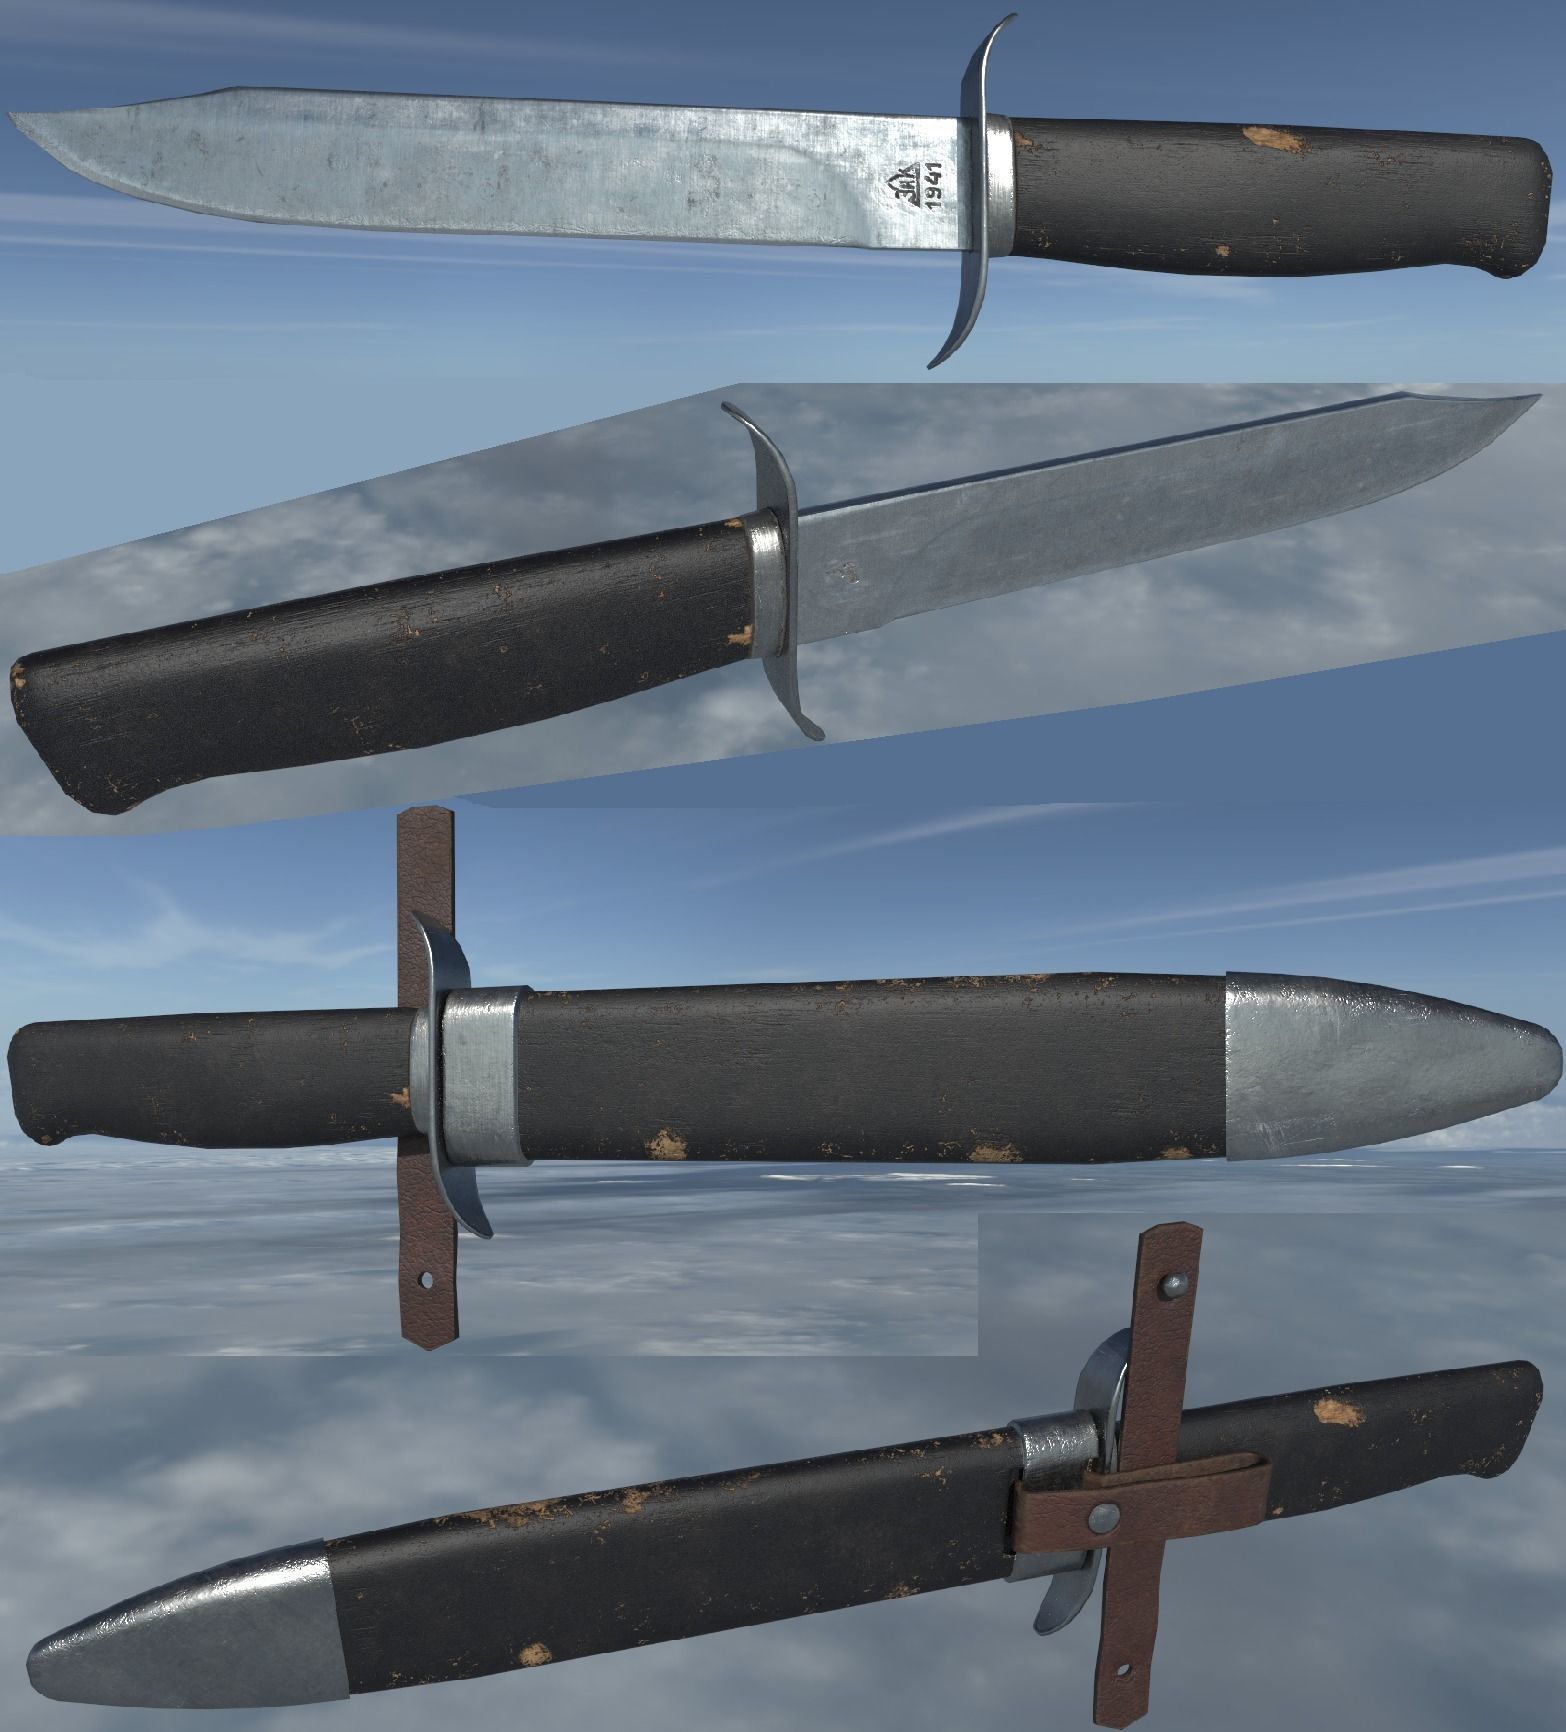 nr40-soviet-ww2-combat-knife-with-shealth-3d-model-low-poly-obj-3ds-fbx-blend.png